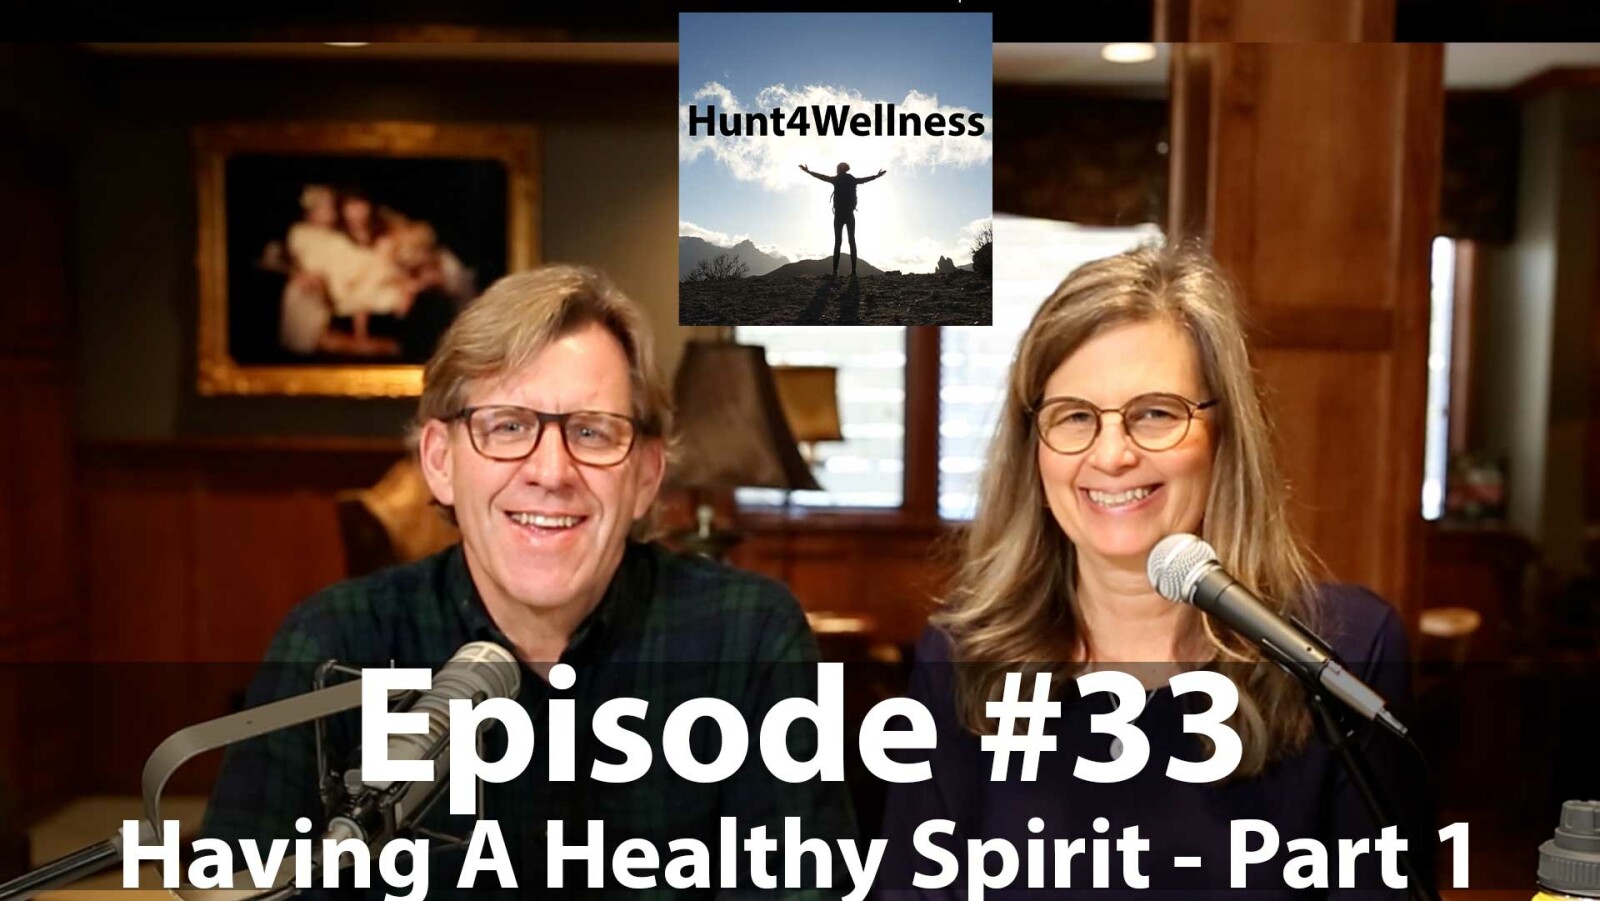 Episode #33 - Having a Healthy Spirit Part 1